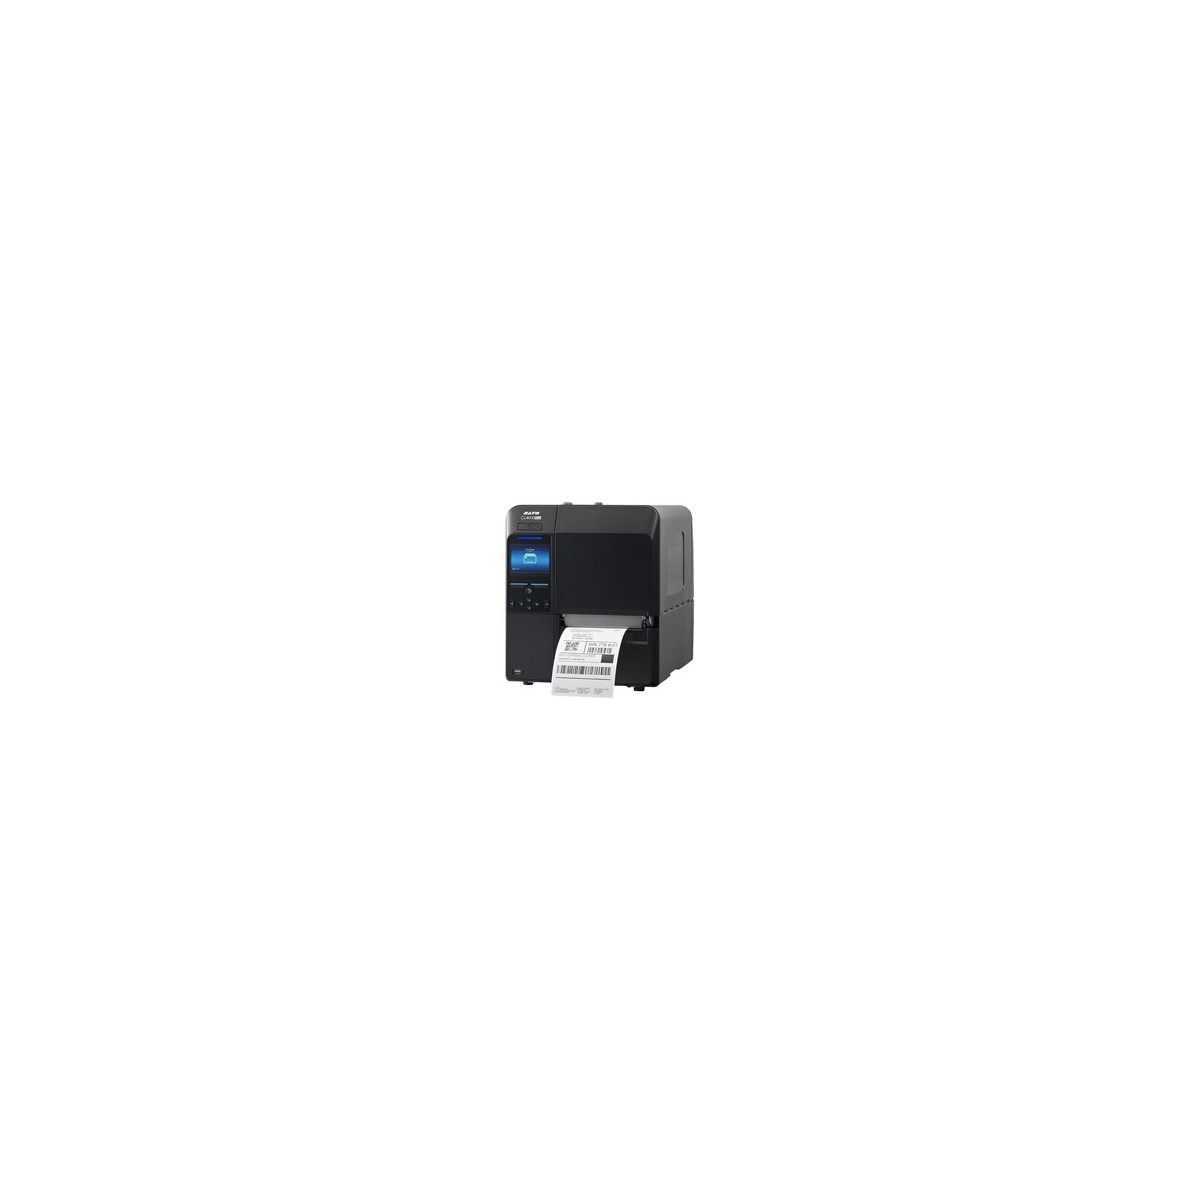 SATO CL4NX Plus - Direct thermal - POS printer - 203 x 203 DPI - 14 ips - 355 mm-sec - 0.06 - 0.268 µm